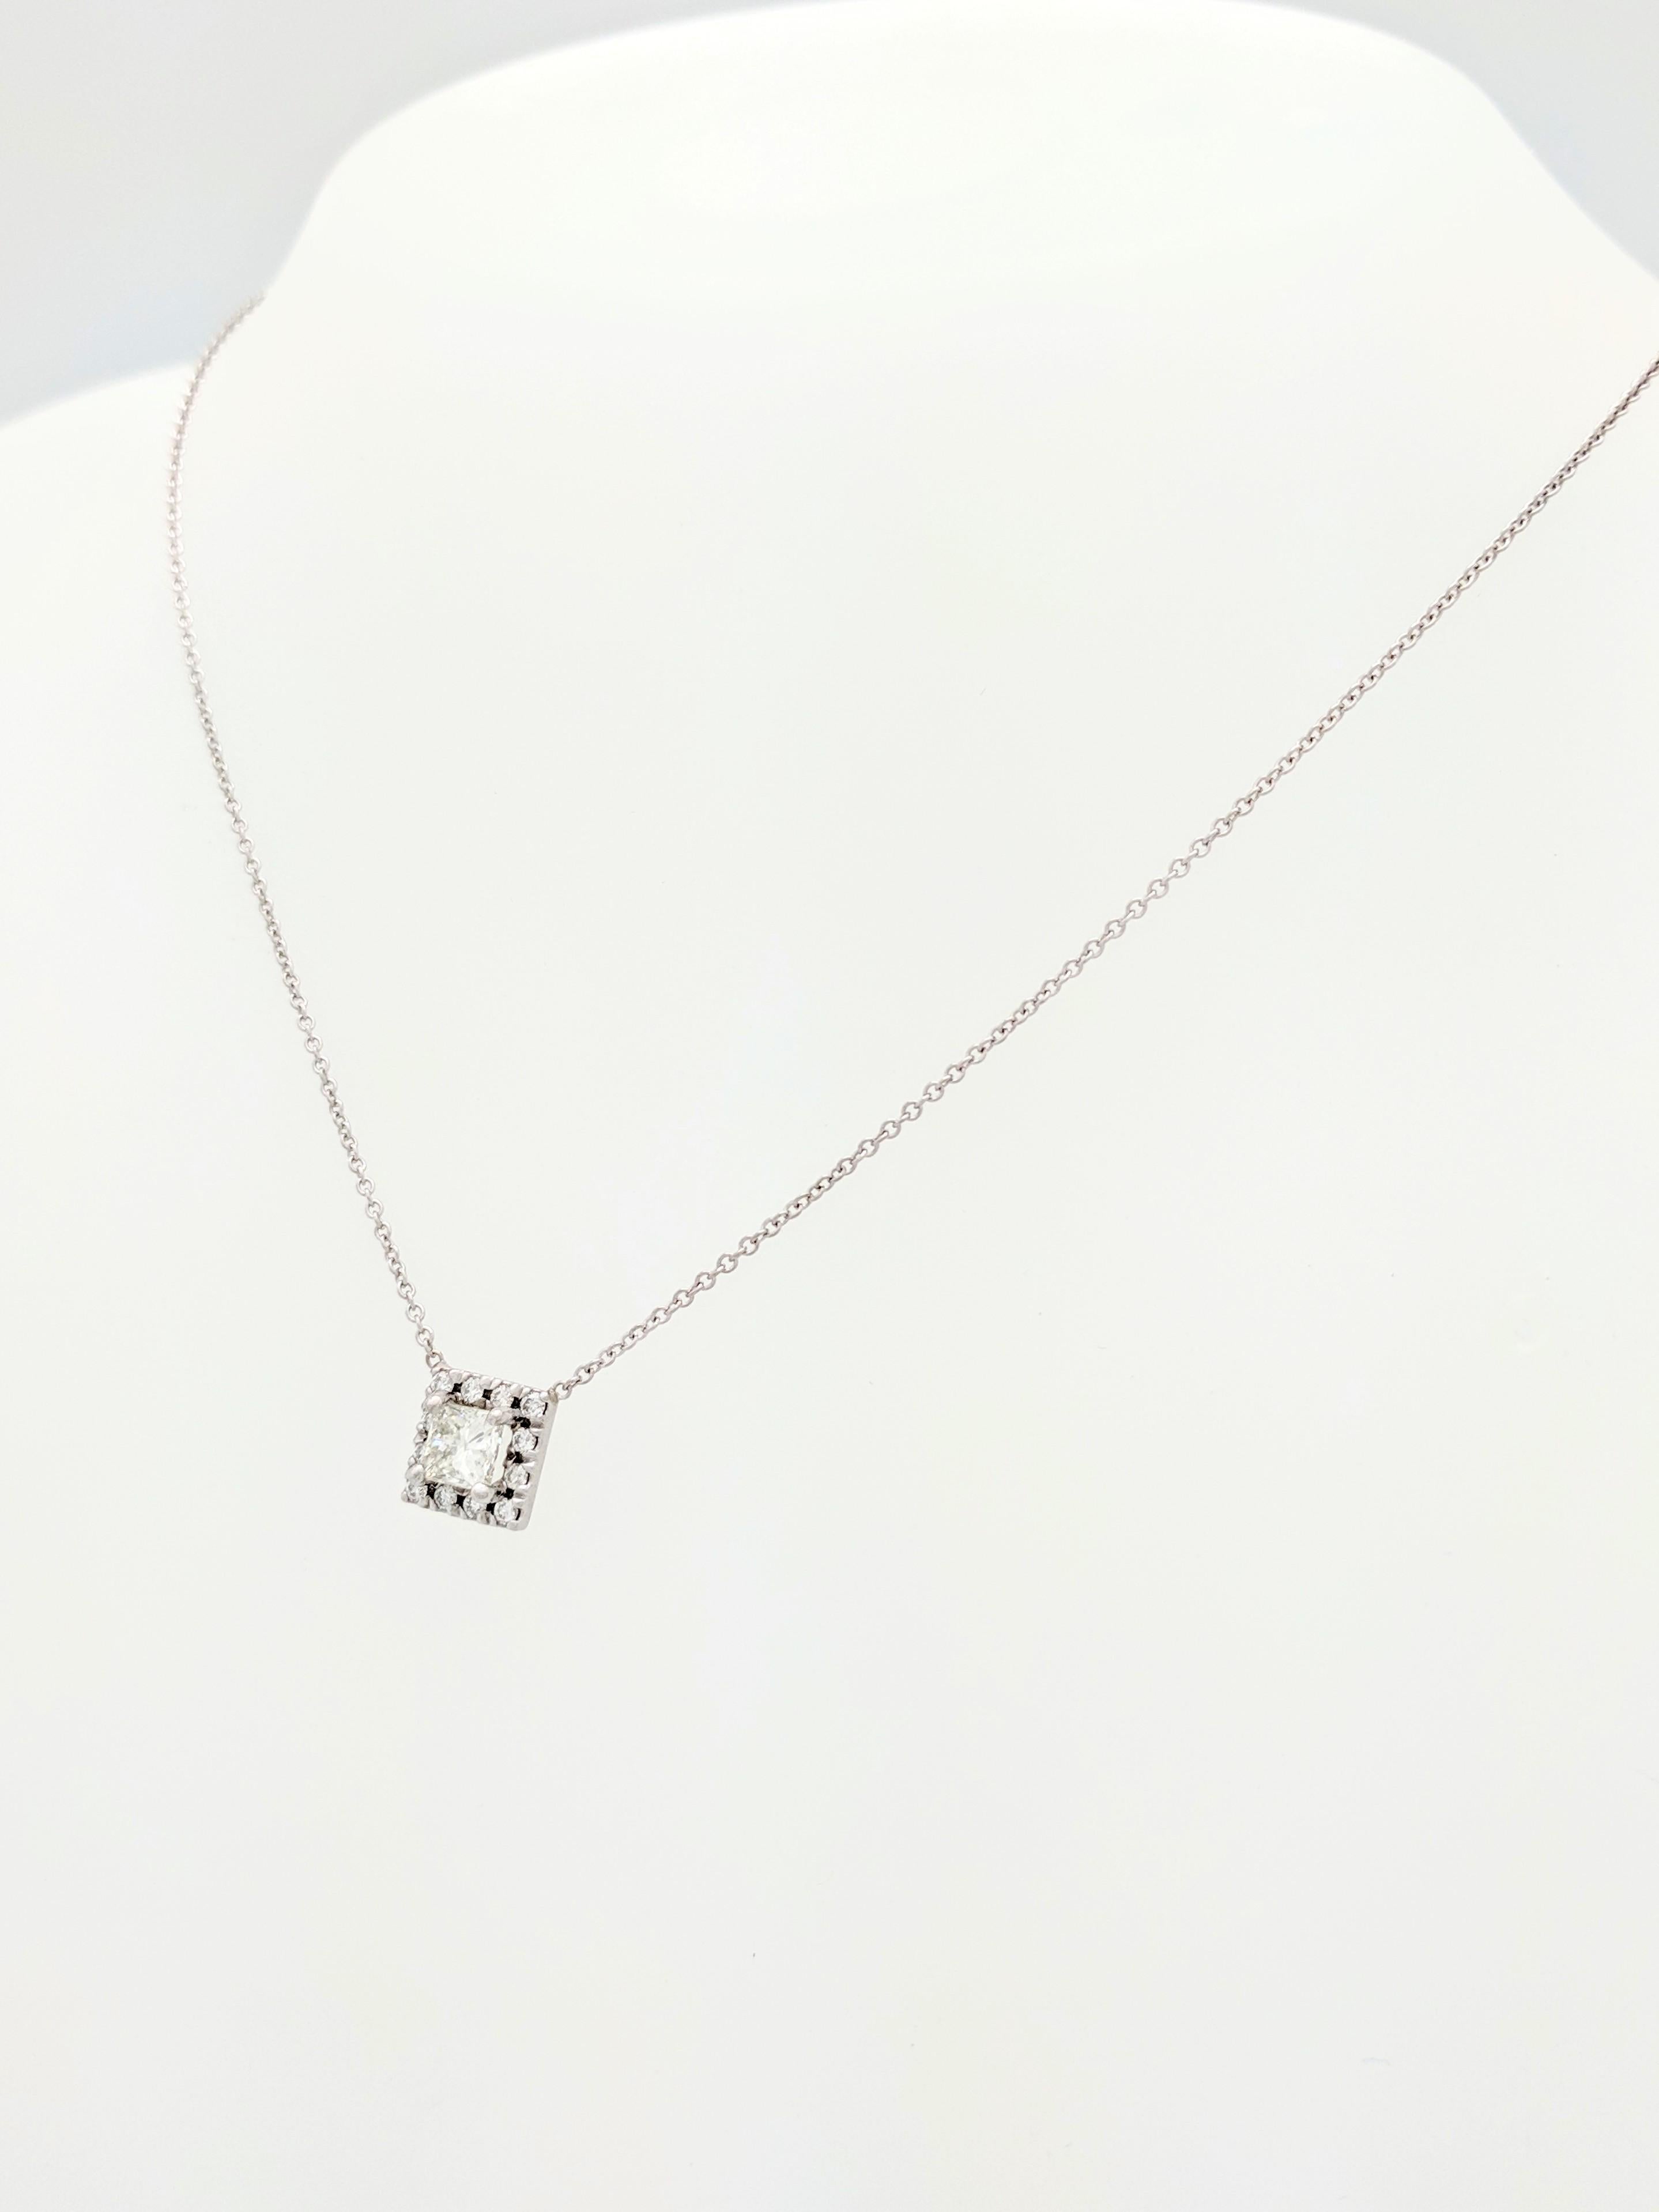 Contemporary 14 Karat White Gold .57 Carat Princess Cut Diamond Square Halo Pendant Necklace For Sale